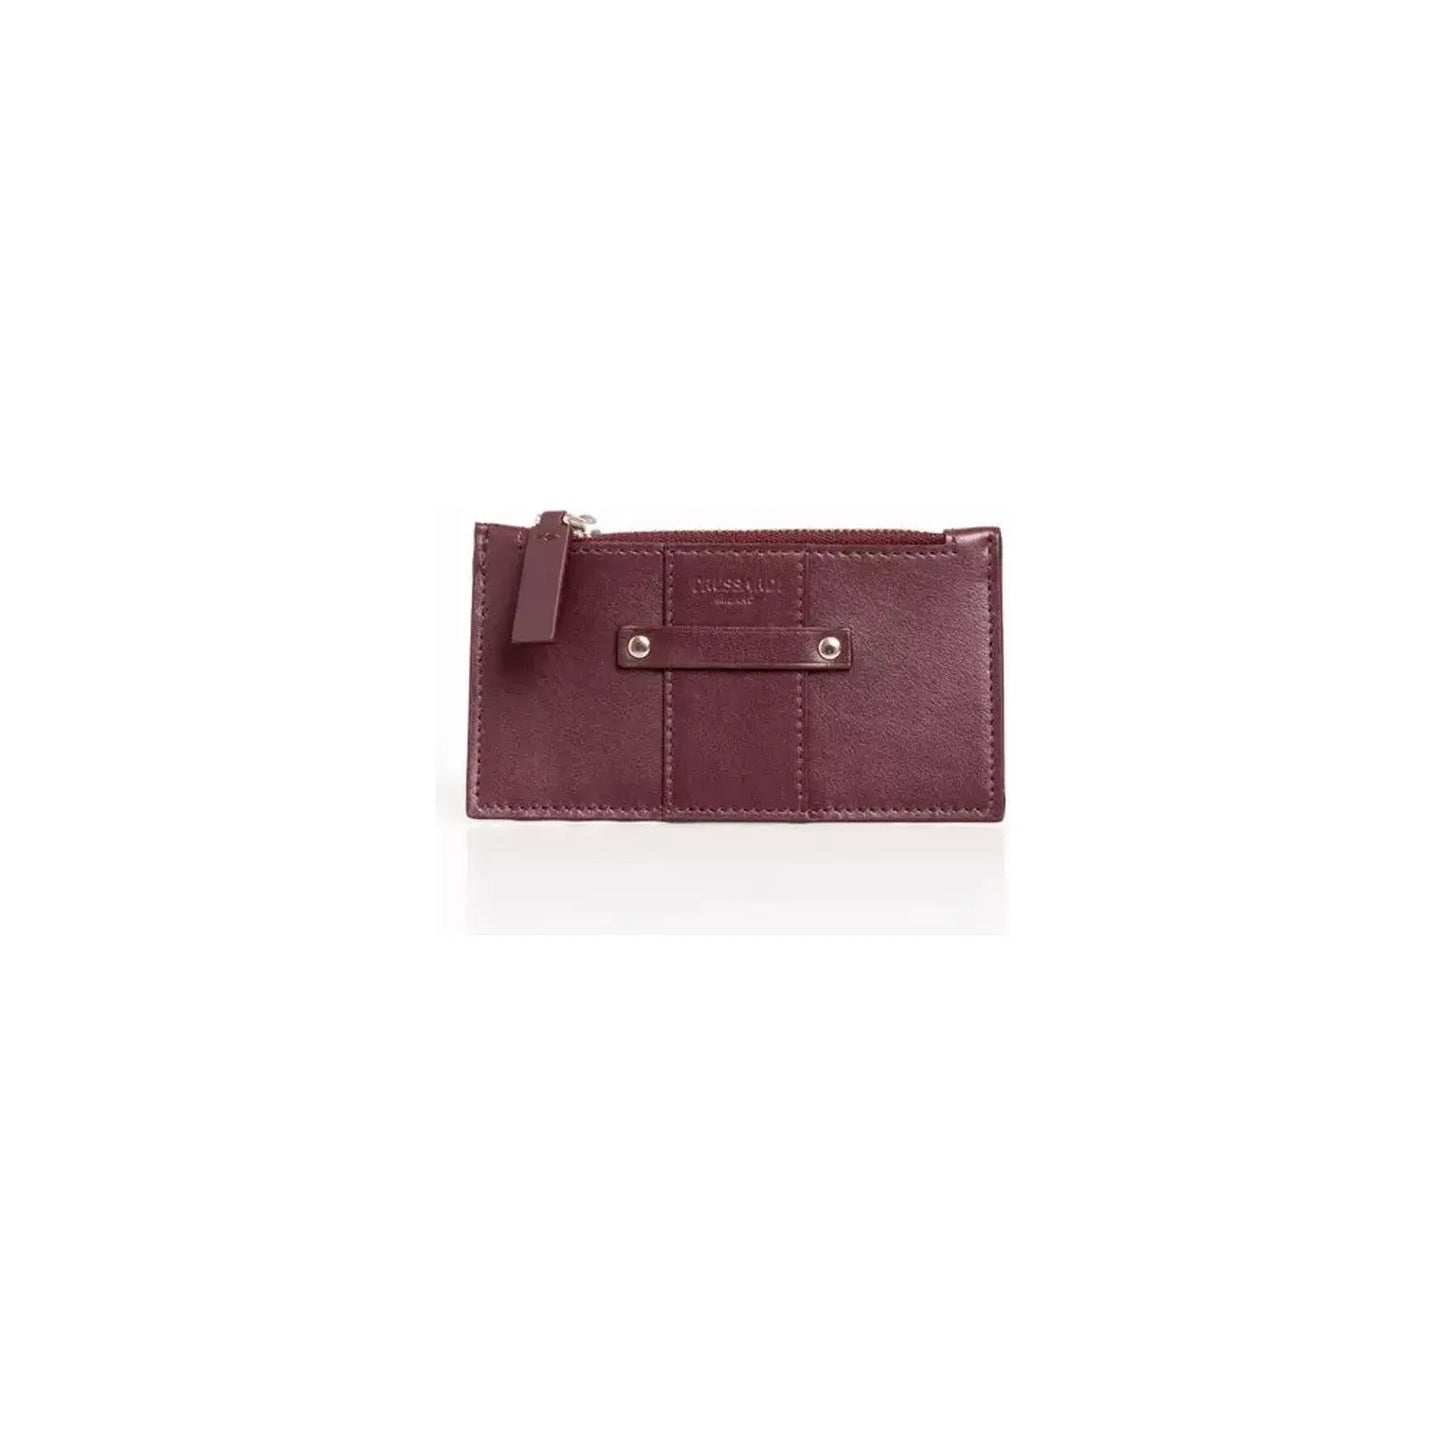 Trussardi Elegant Soft Leather Card Holder in Rich Brown r-wallet-6 Wallet stock_product_image_21579_1897785078-27-9669ecfc-c2c.webp